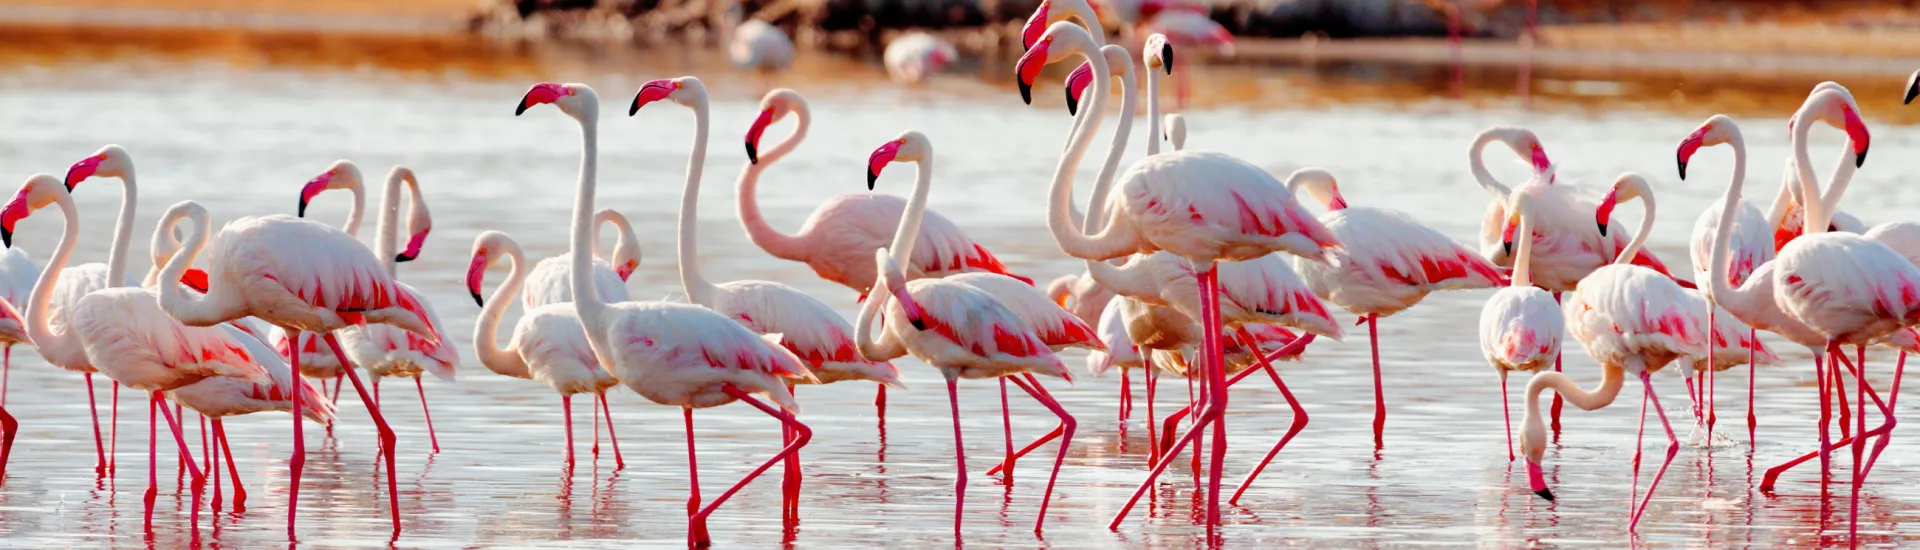 Flamingos near Bogoria Lake, Kenya